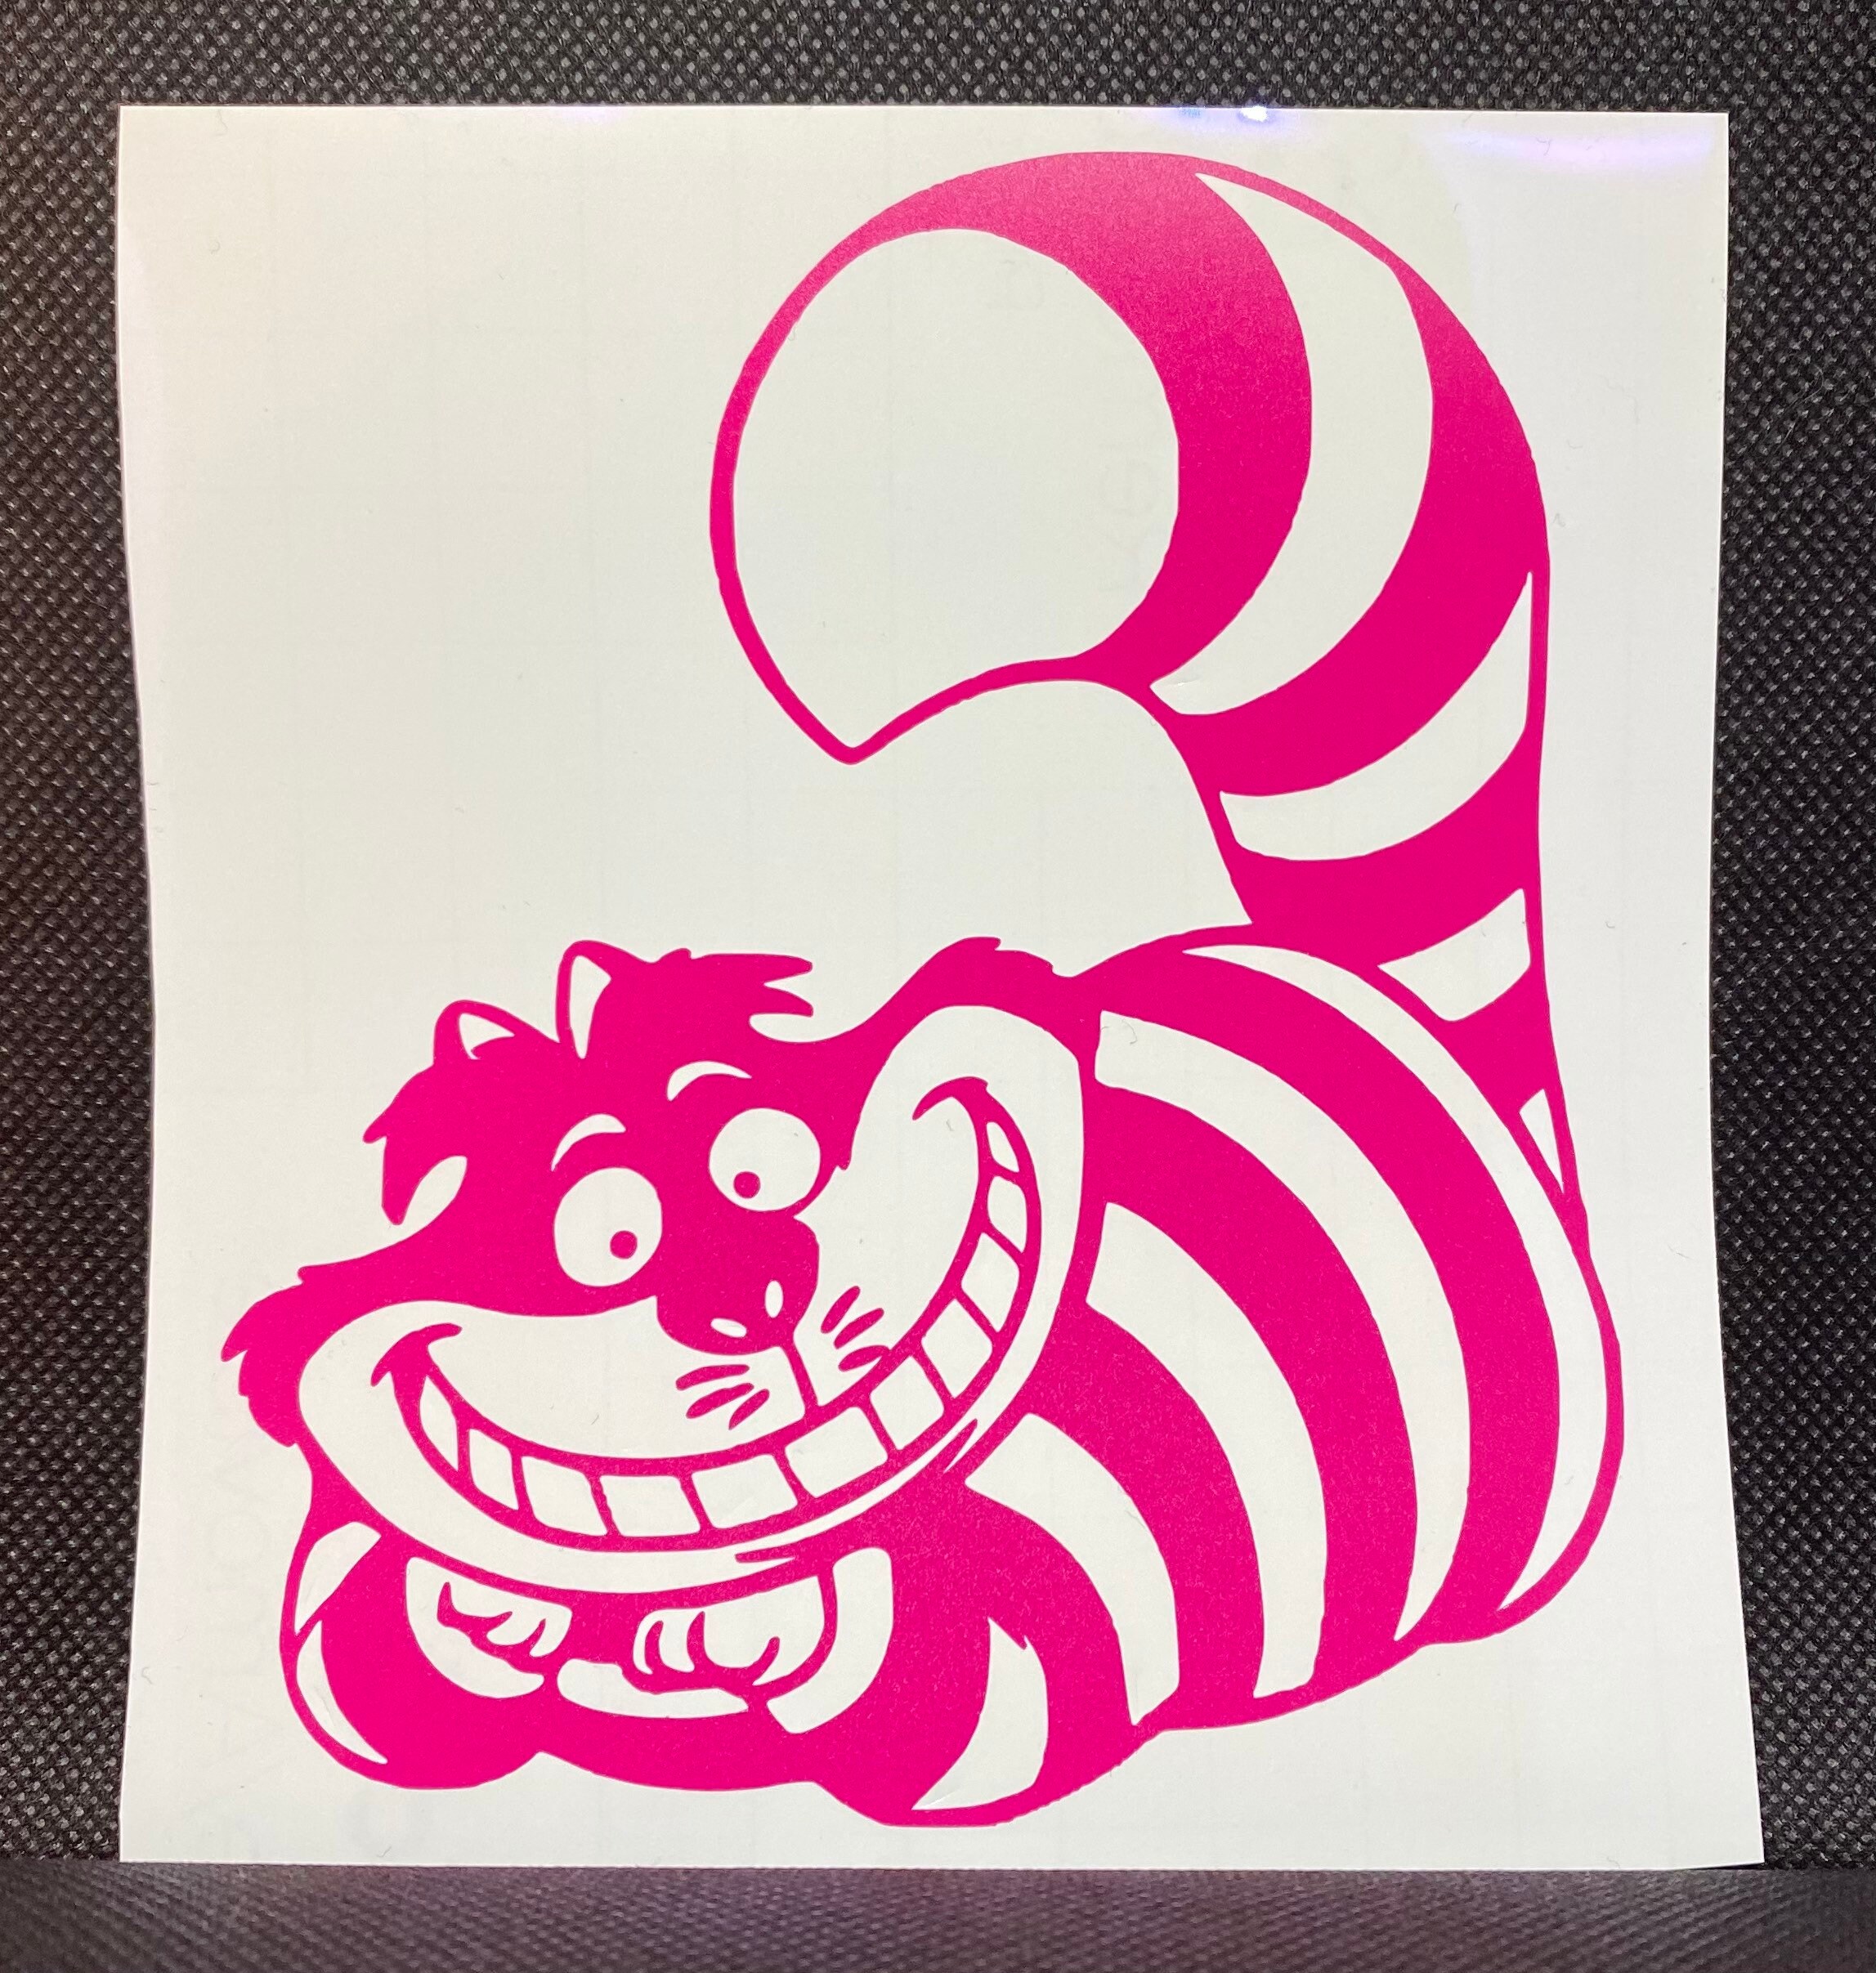 Cheshire Cat Smile Fun Sticker Decal Graphic Vinyl Label Black